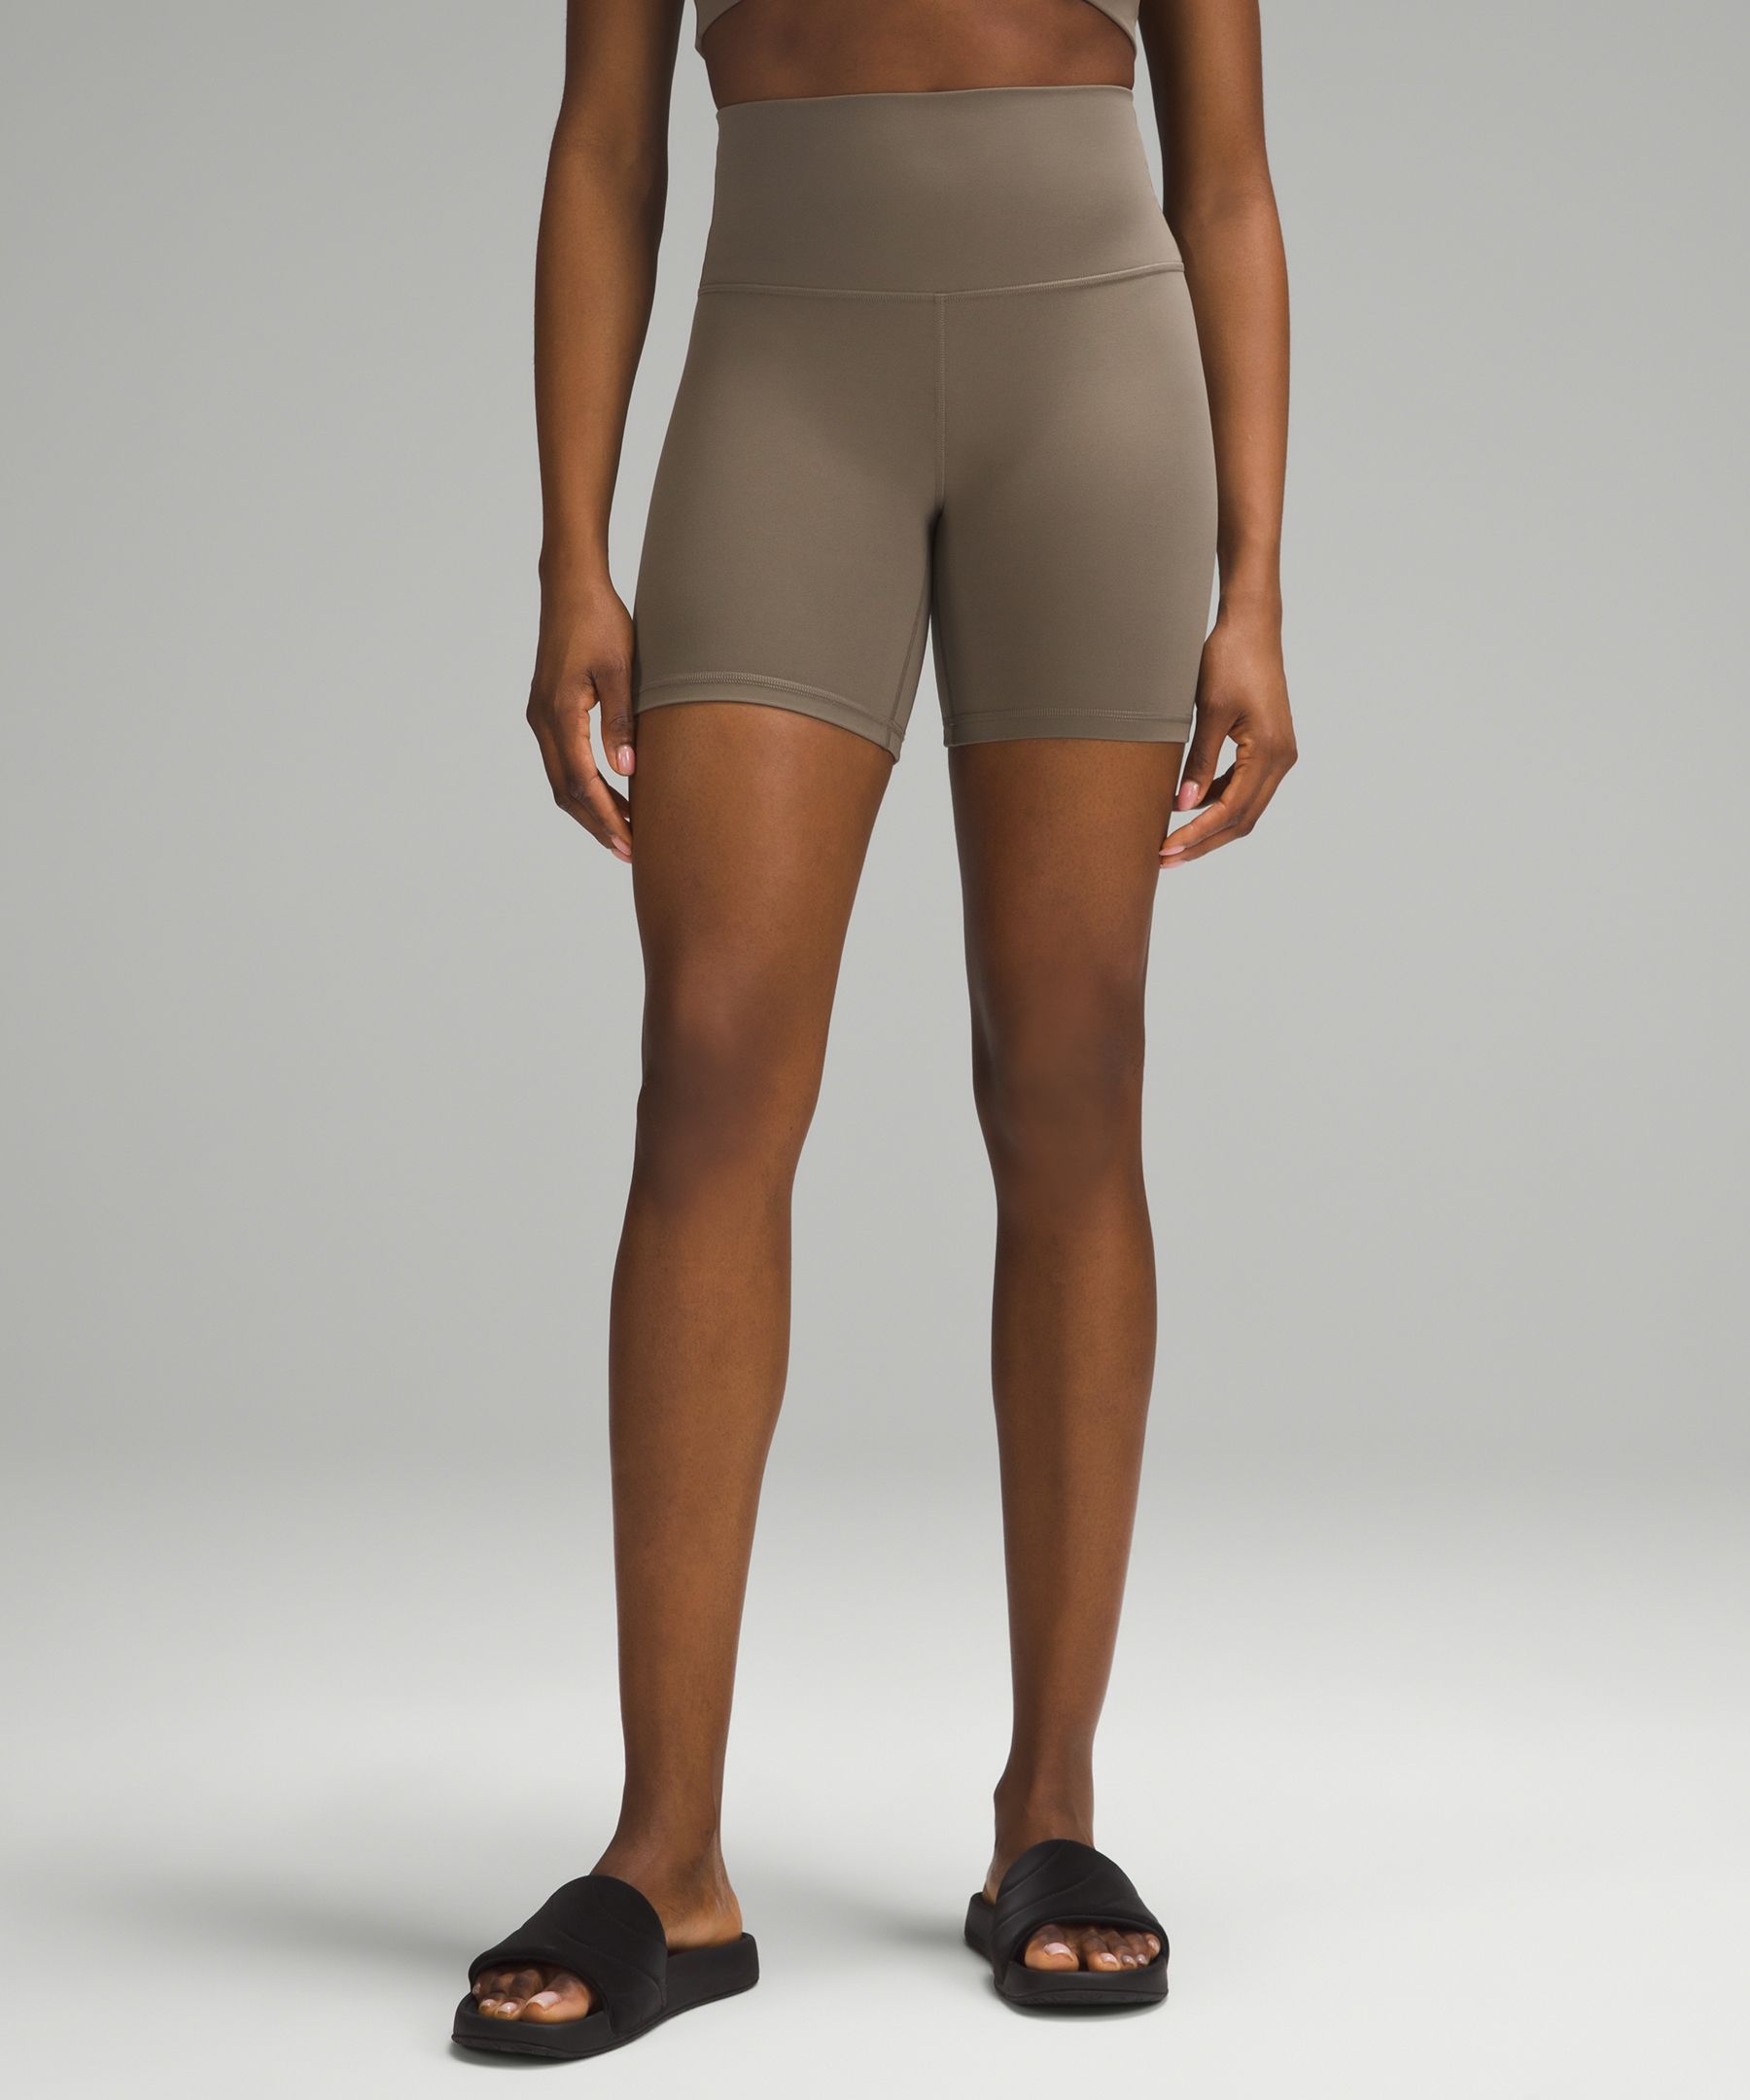 Lululemon Align™ High-rise Shorts 6"